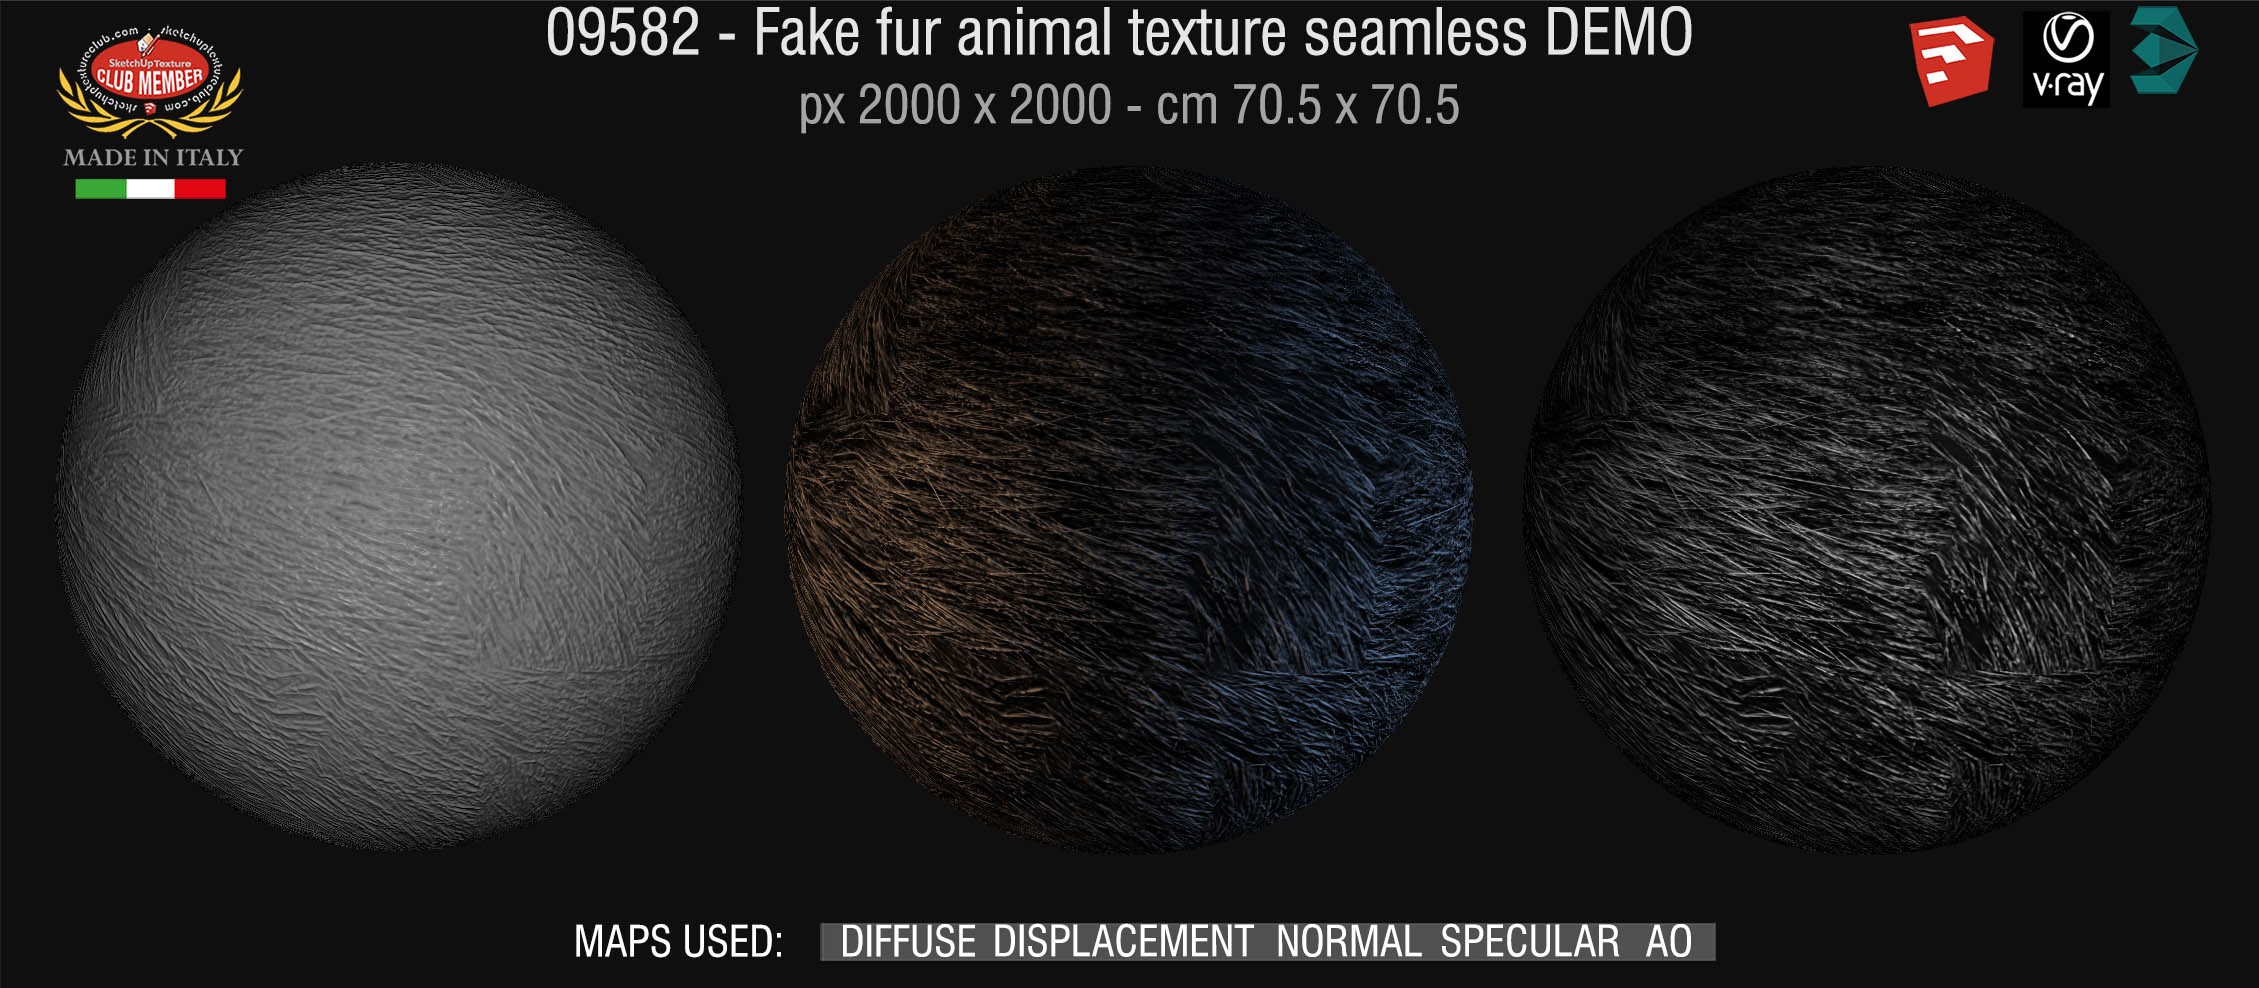 09582 HR fake fur animal texture seamless + maps DEMO